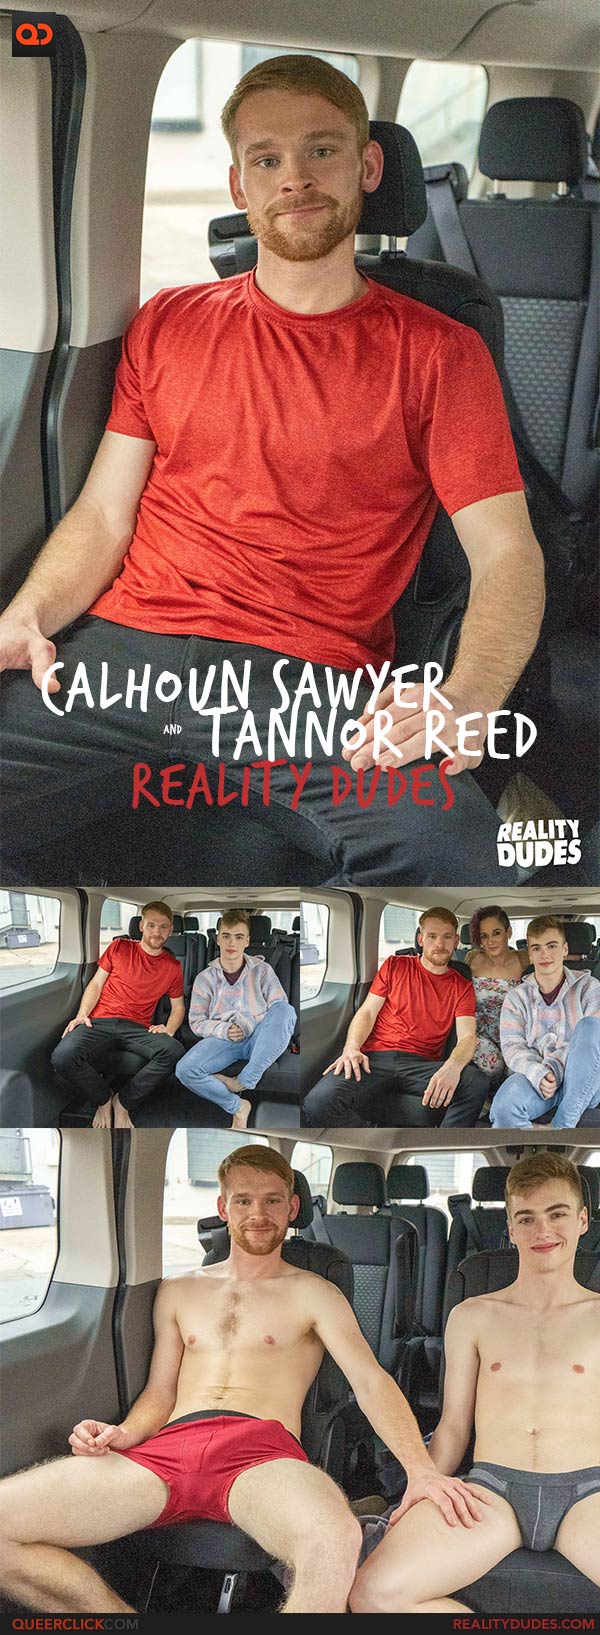 RealityDudes: Calhoun Sawyer and Tannor Reed